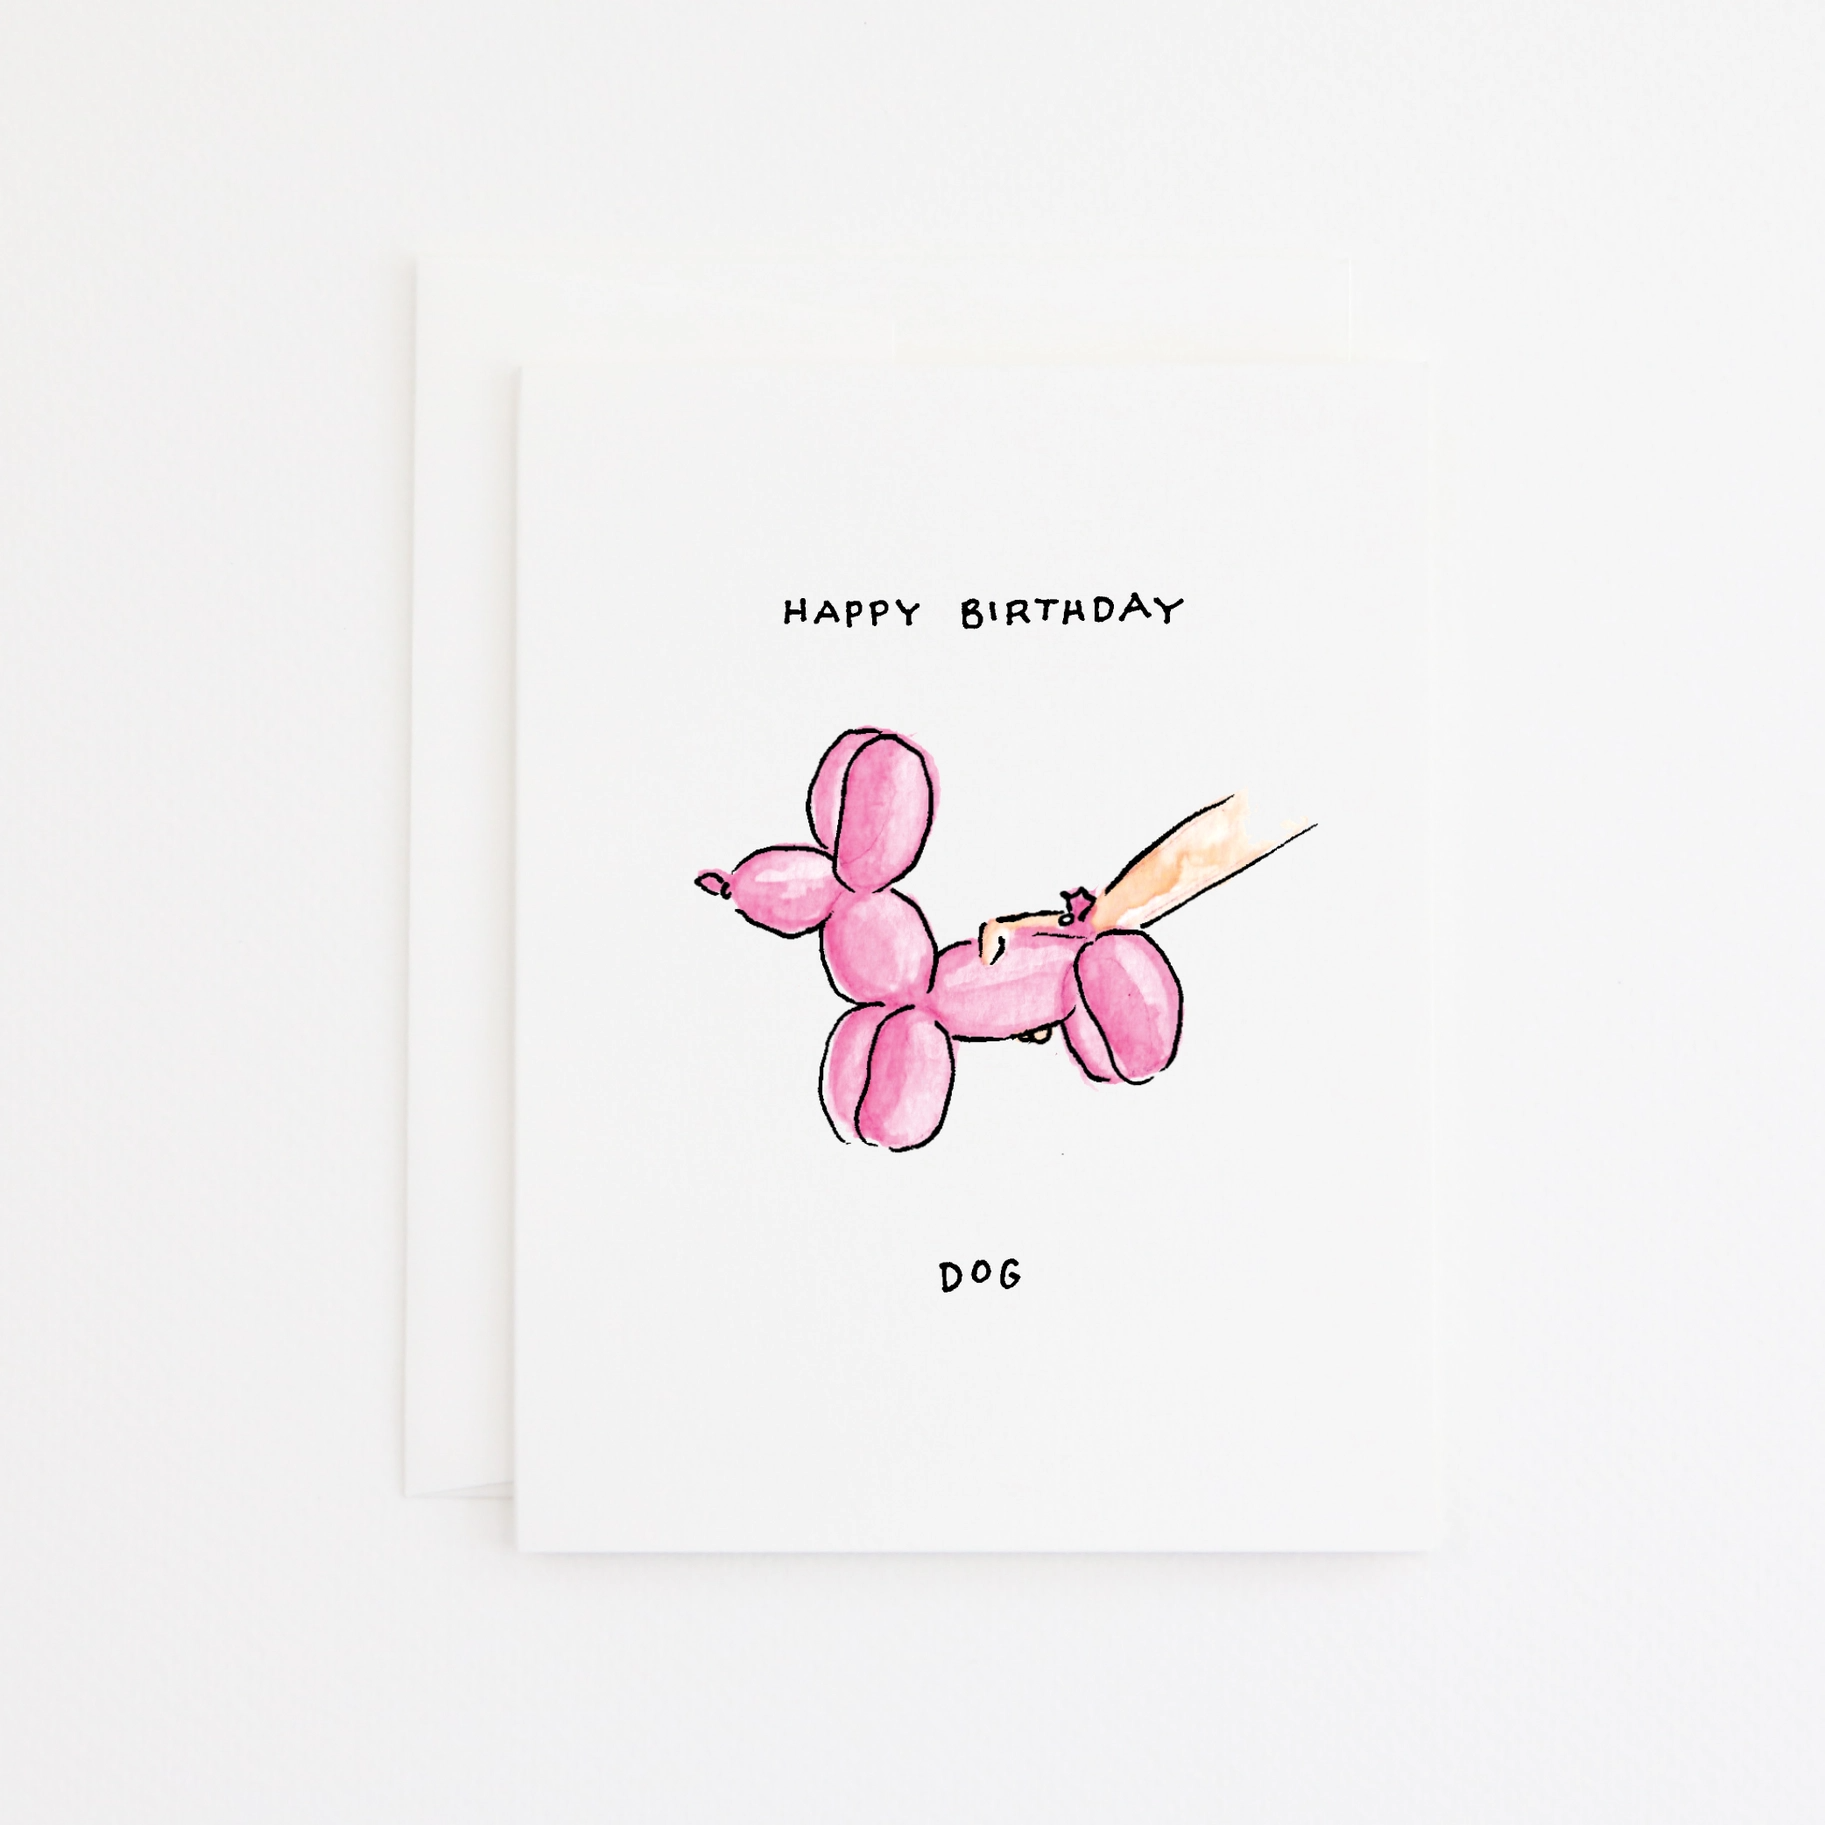 Happy Birthday Balloon Dog - Greeting Card - Mellow Monkey